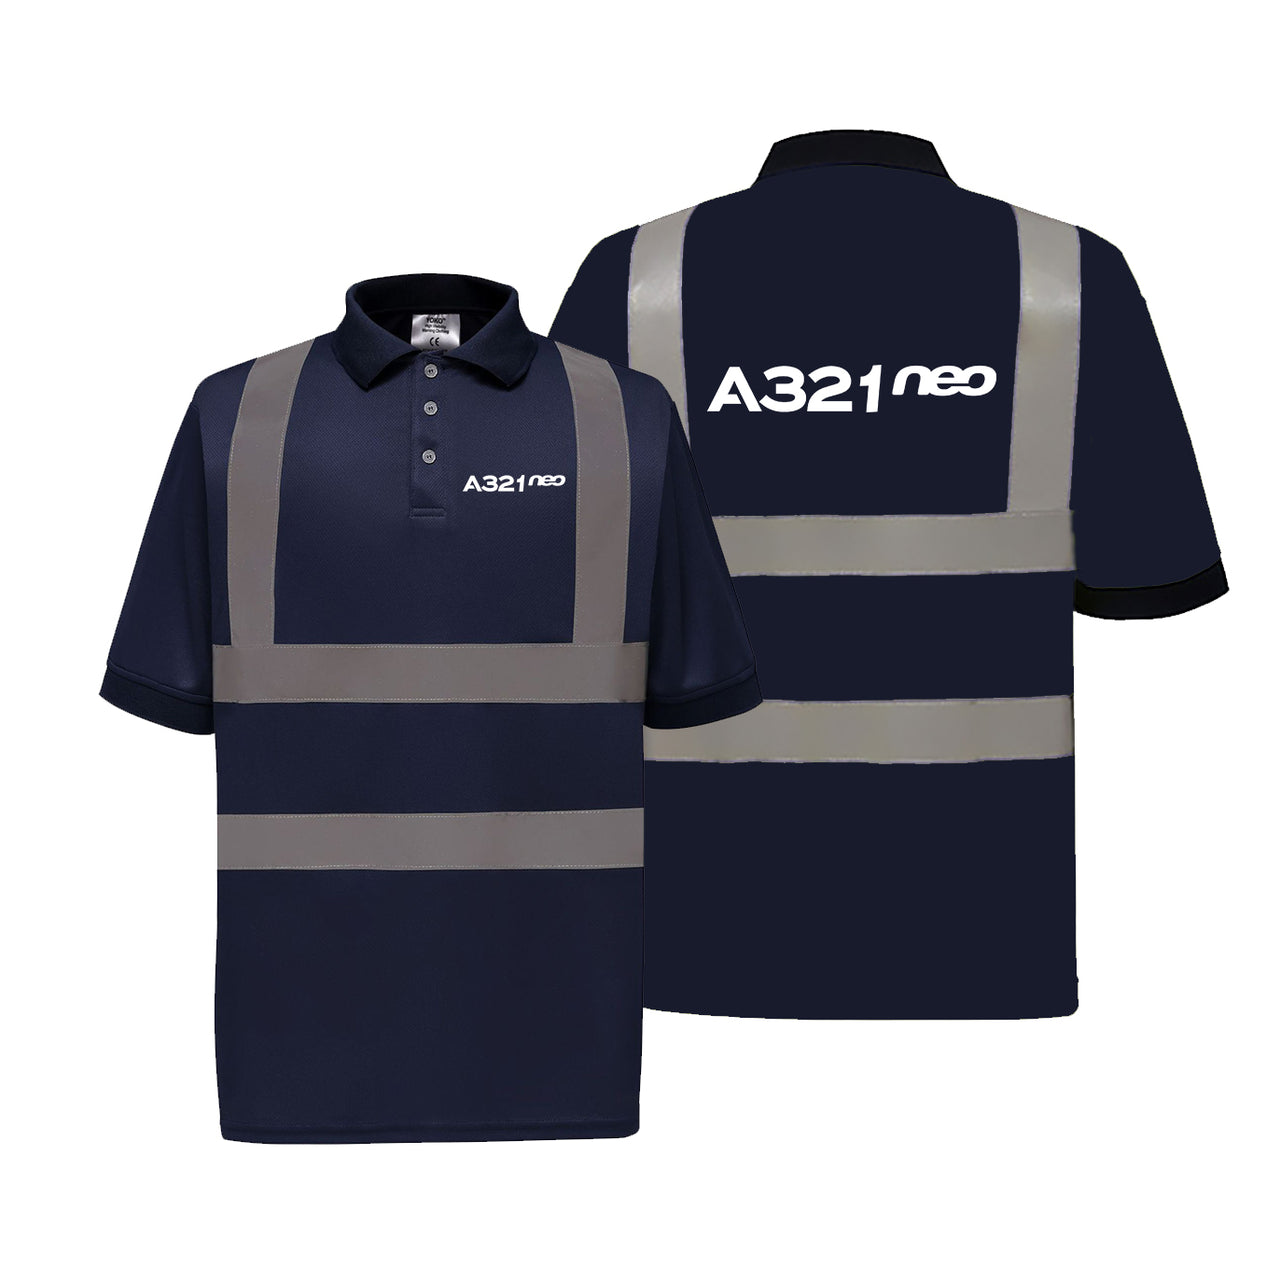 A321neo & Text Designed Reflective Polo T-Shirts